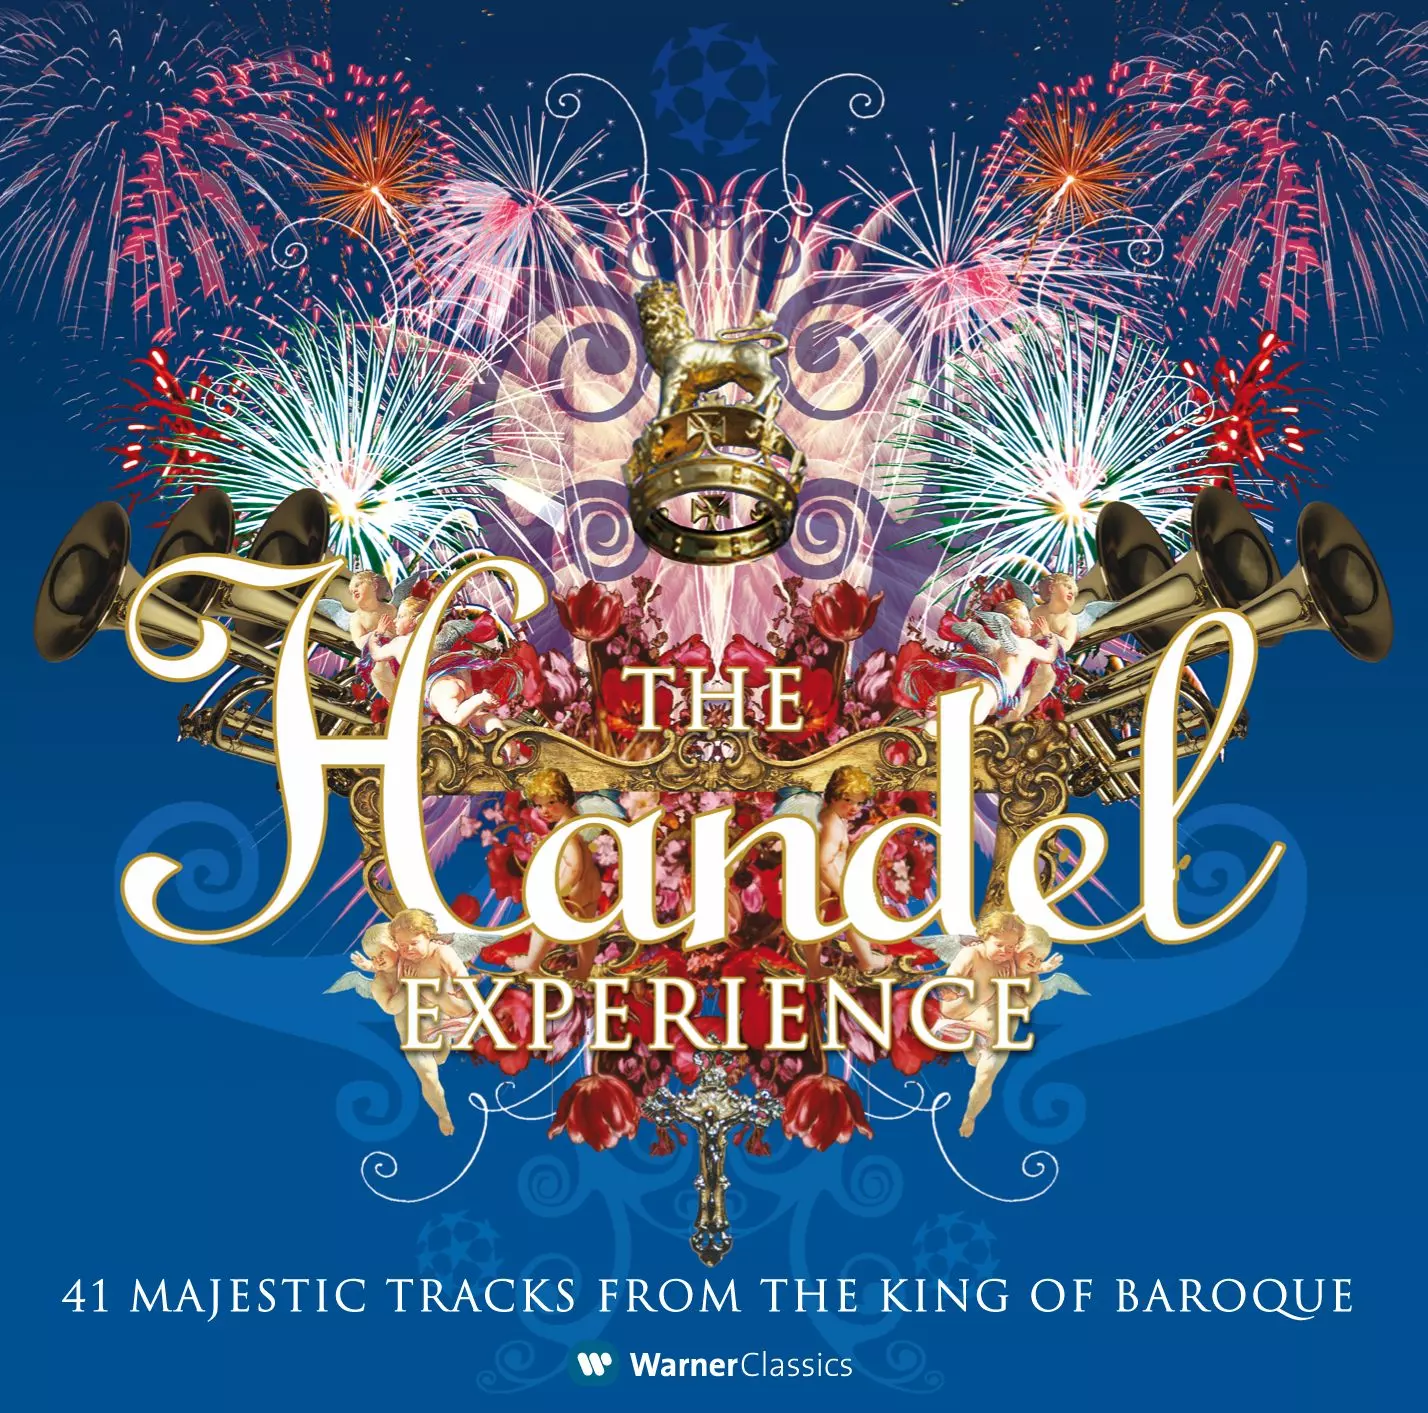 The Händel Experience